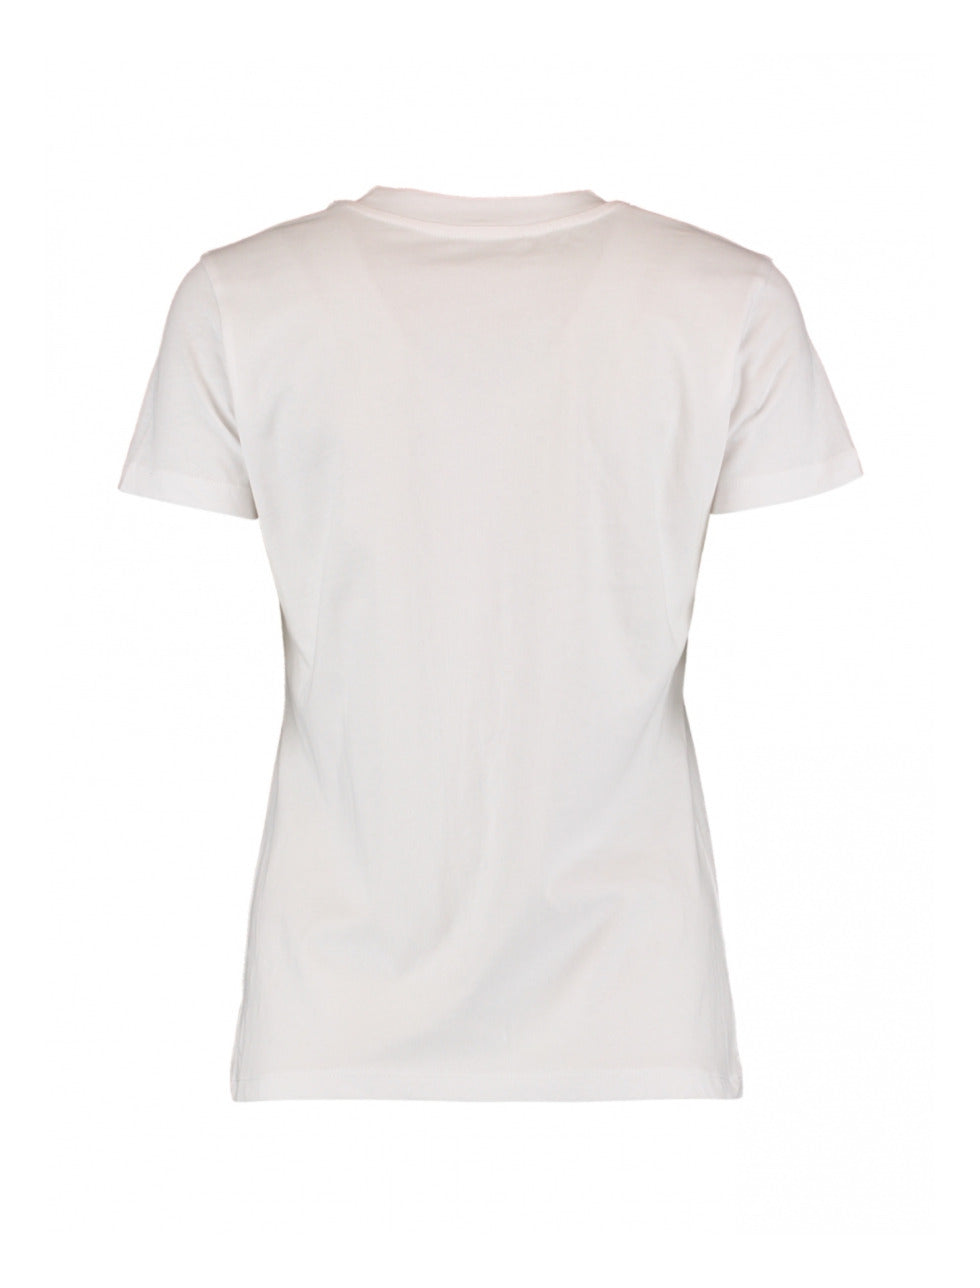 Vibes White Cotton T-Shirt